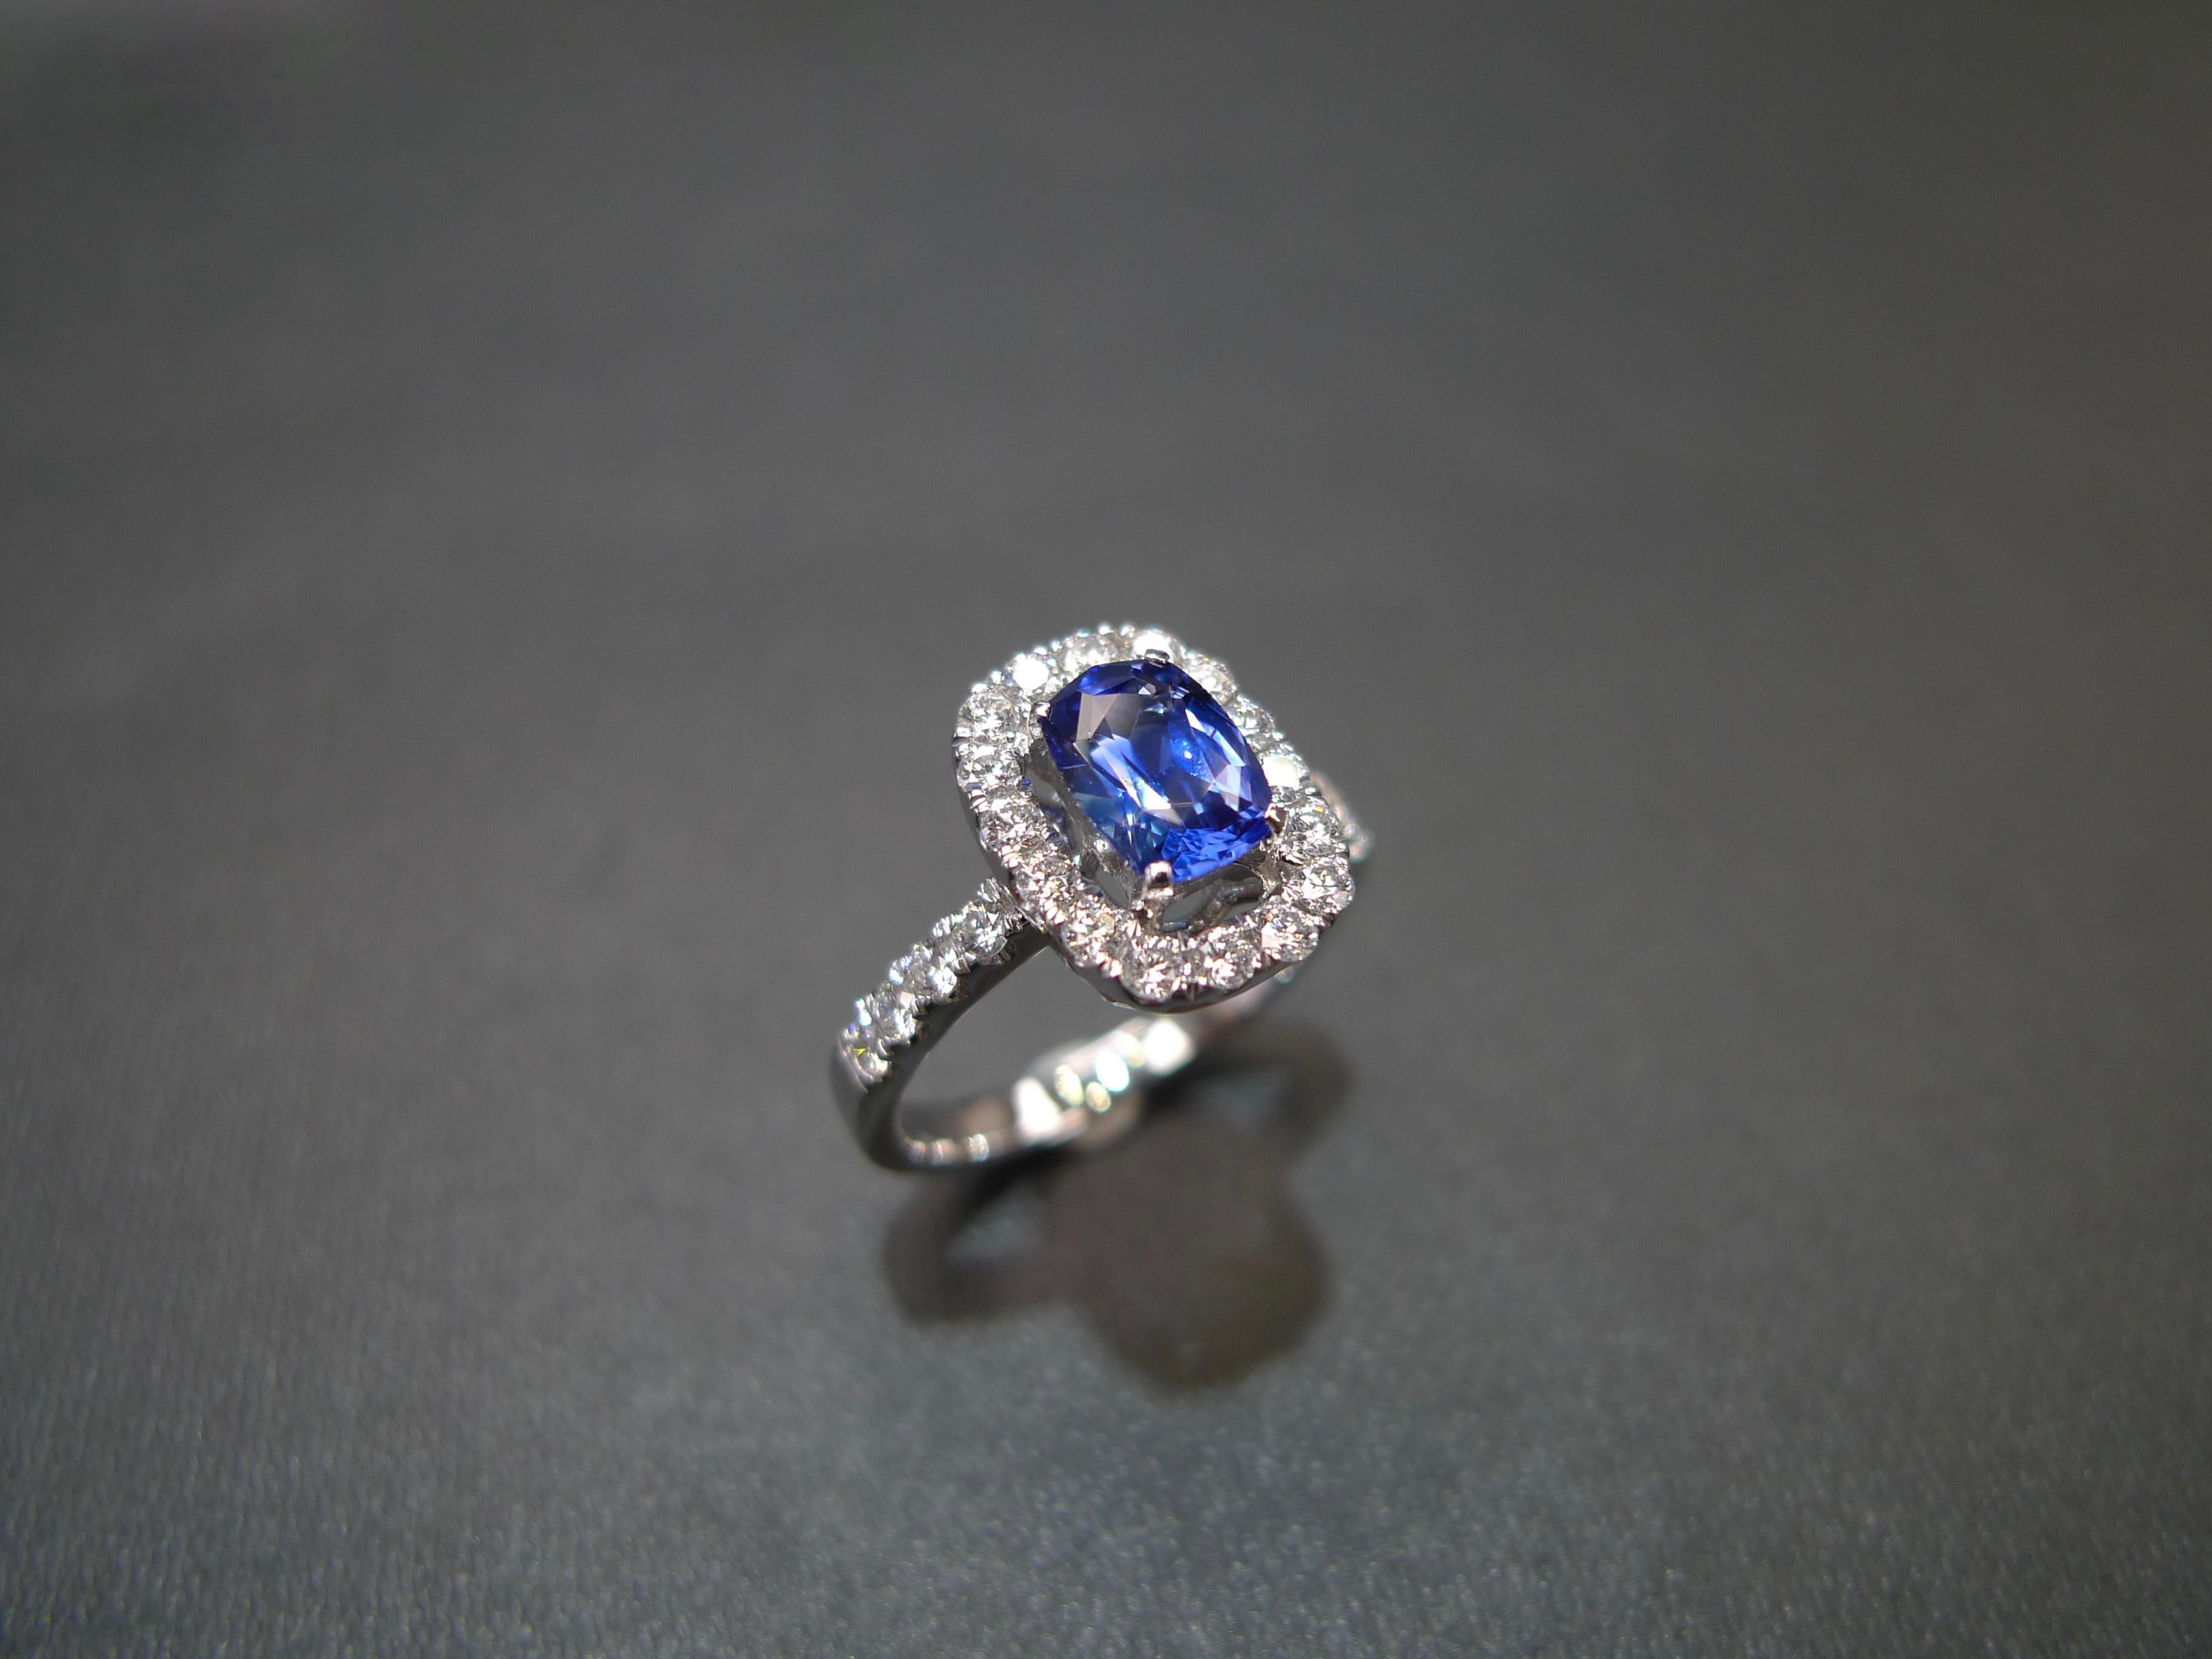 For Sale:  Cushion Cut Natural Burma Blue Sapphire Diamond Halo Engagement Ring White Gold 3